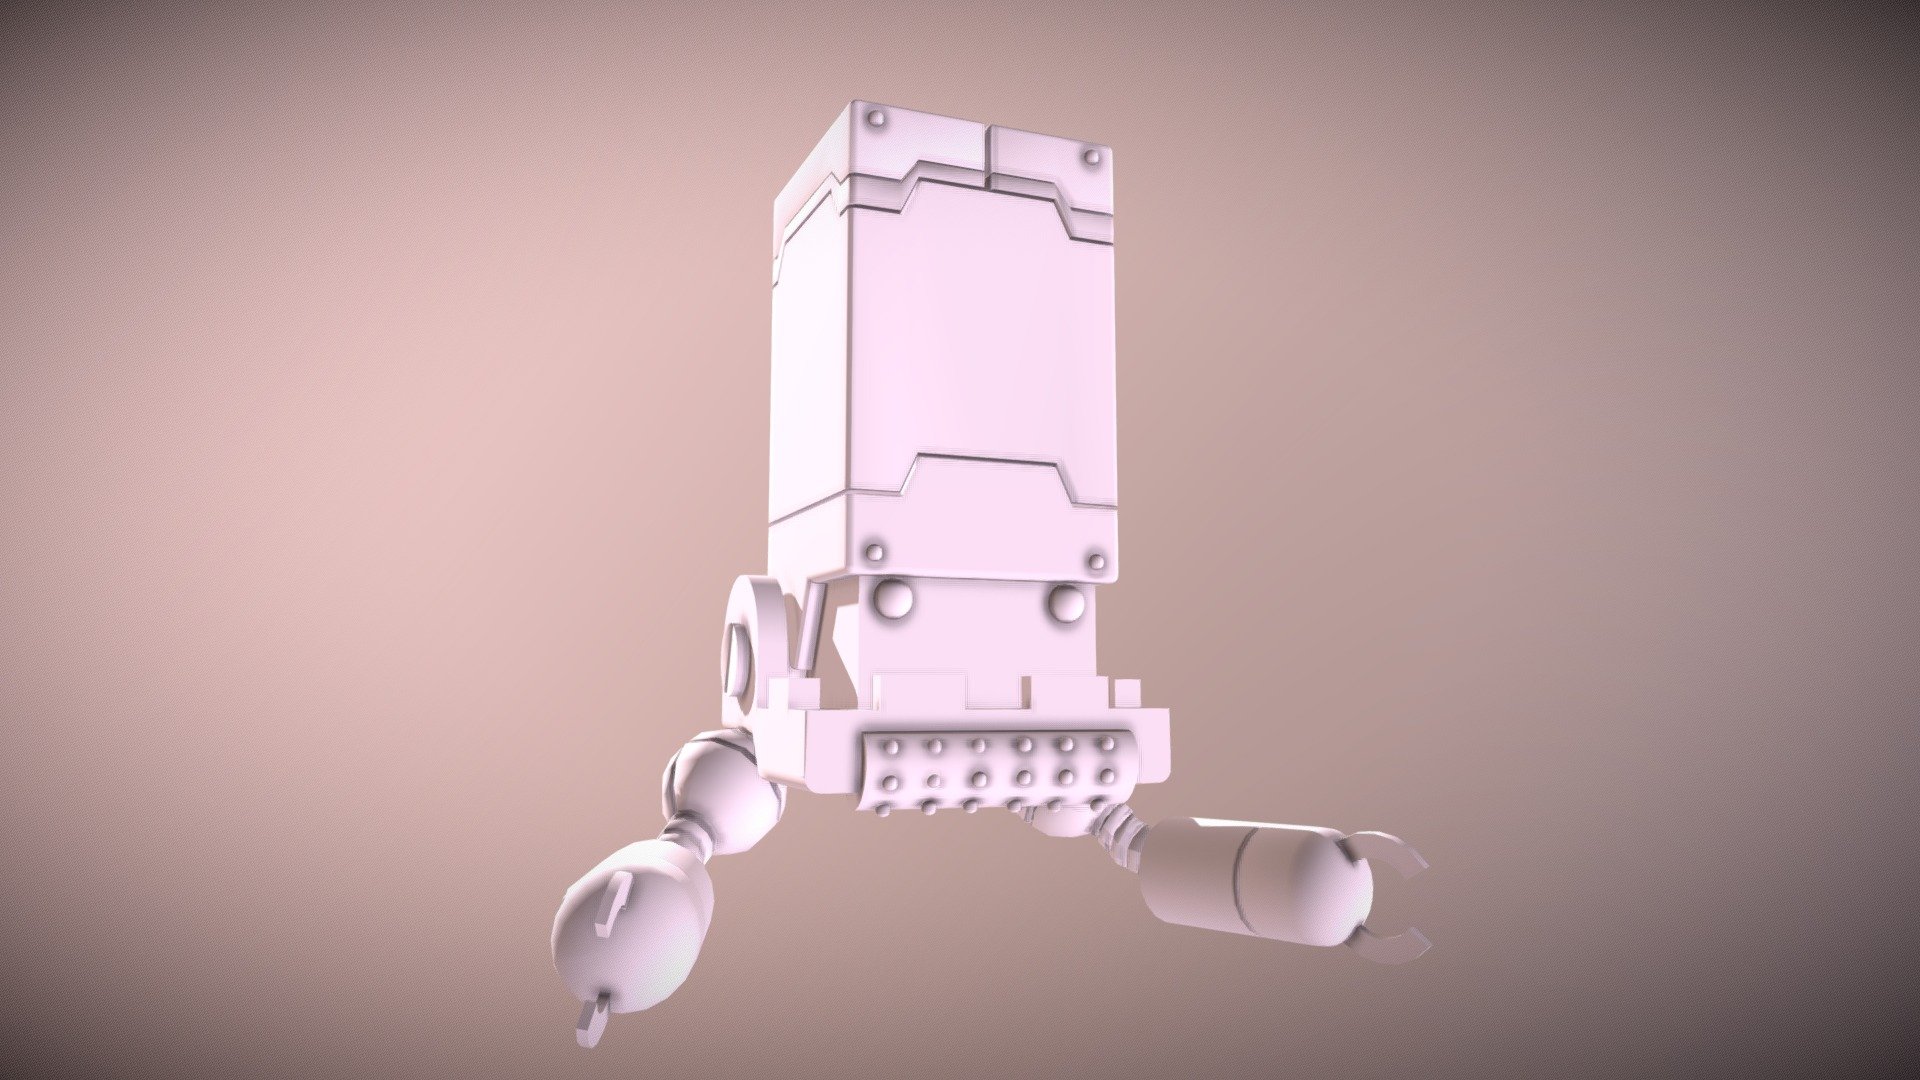 Robot01 - 3D model by MelanieDinter [41003bf] - Sketchfab